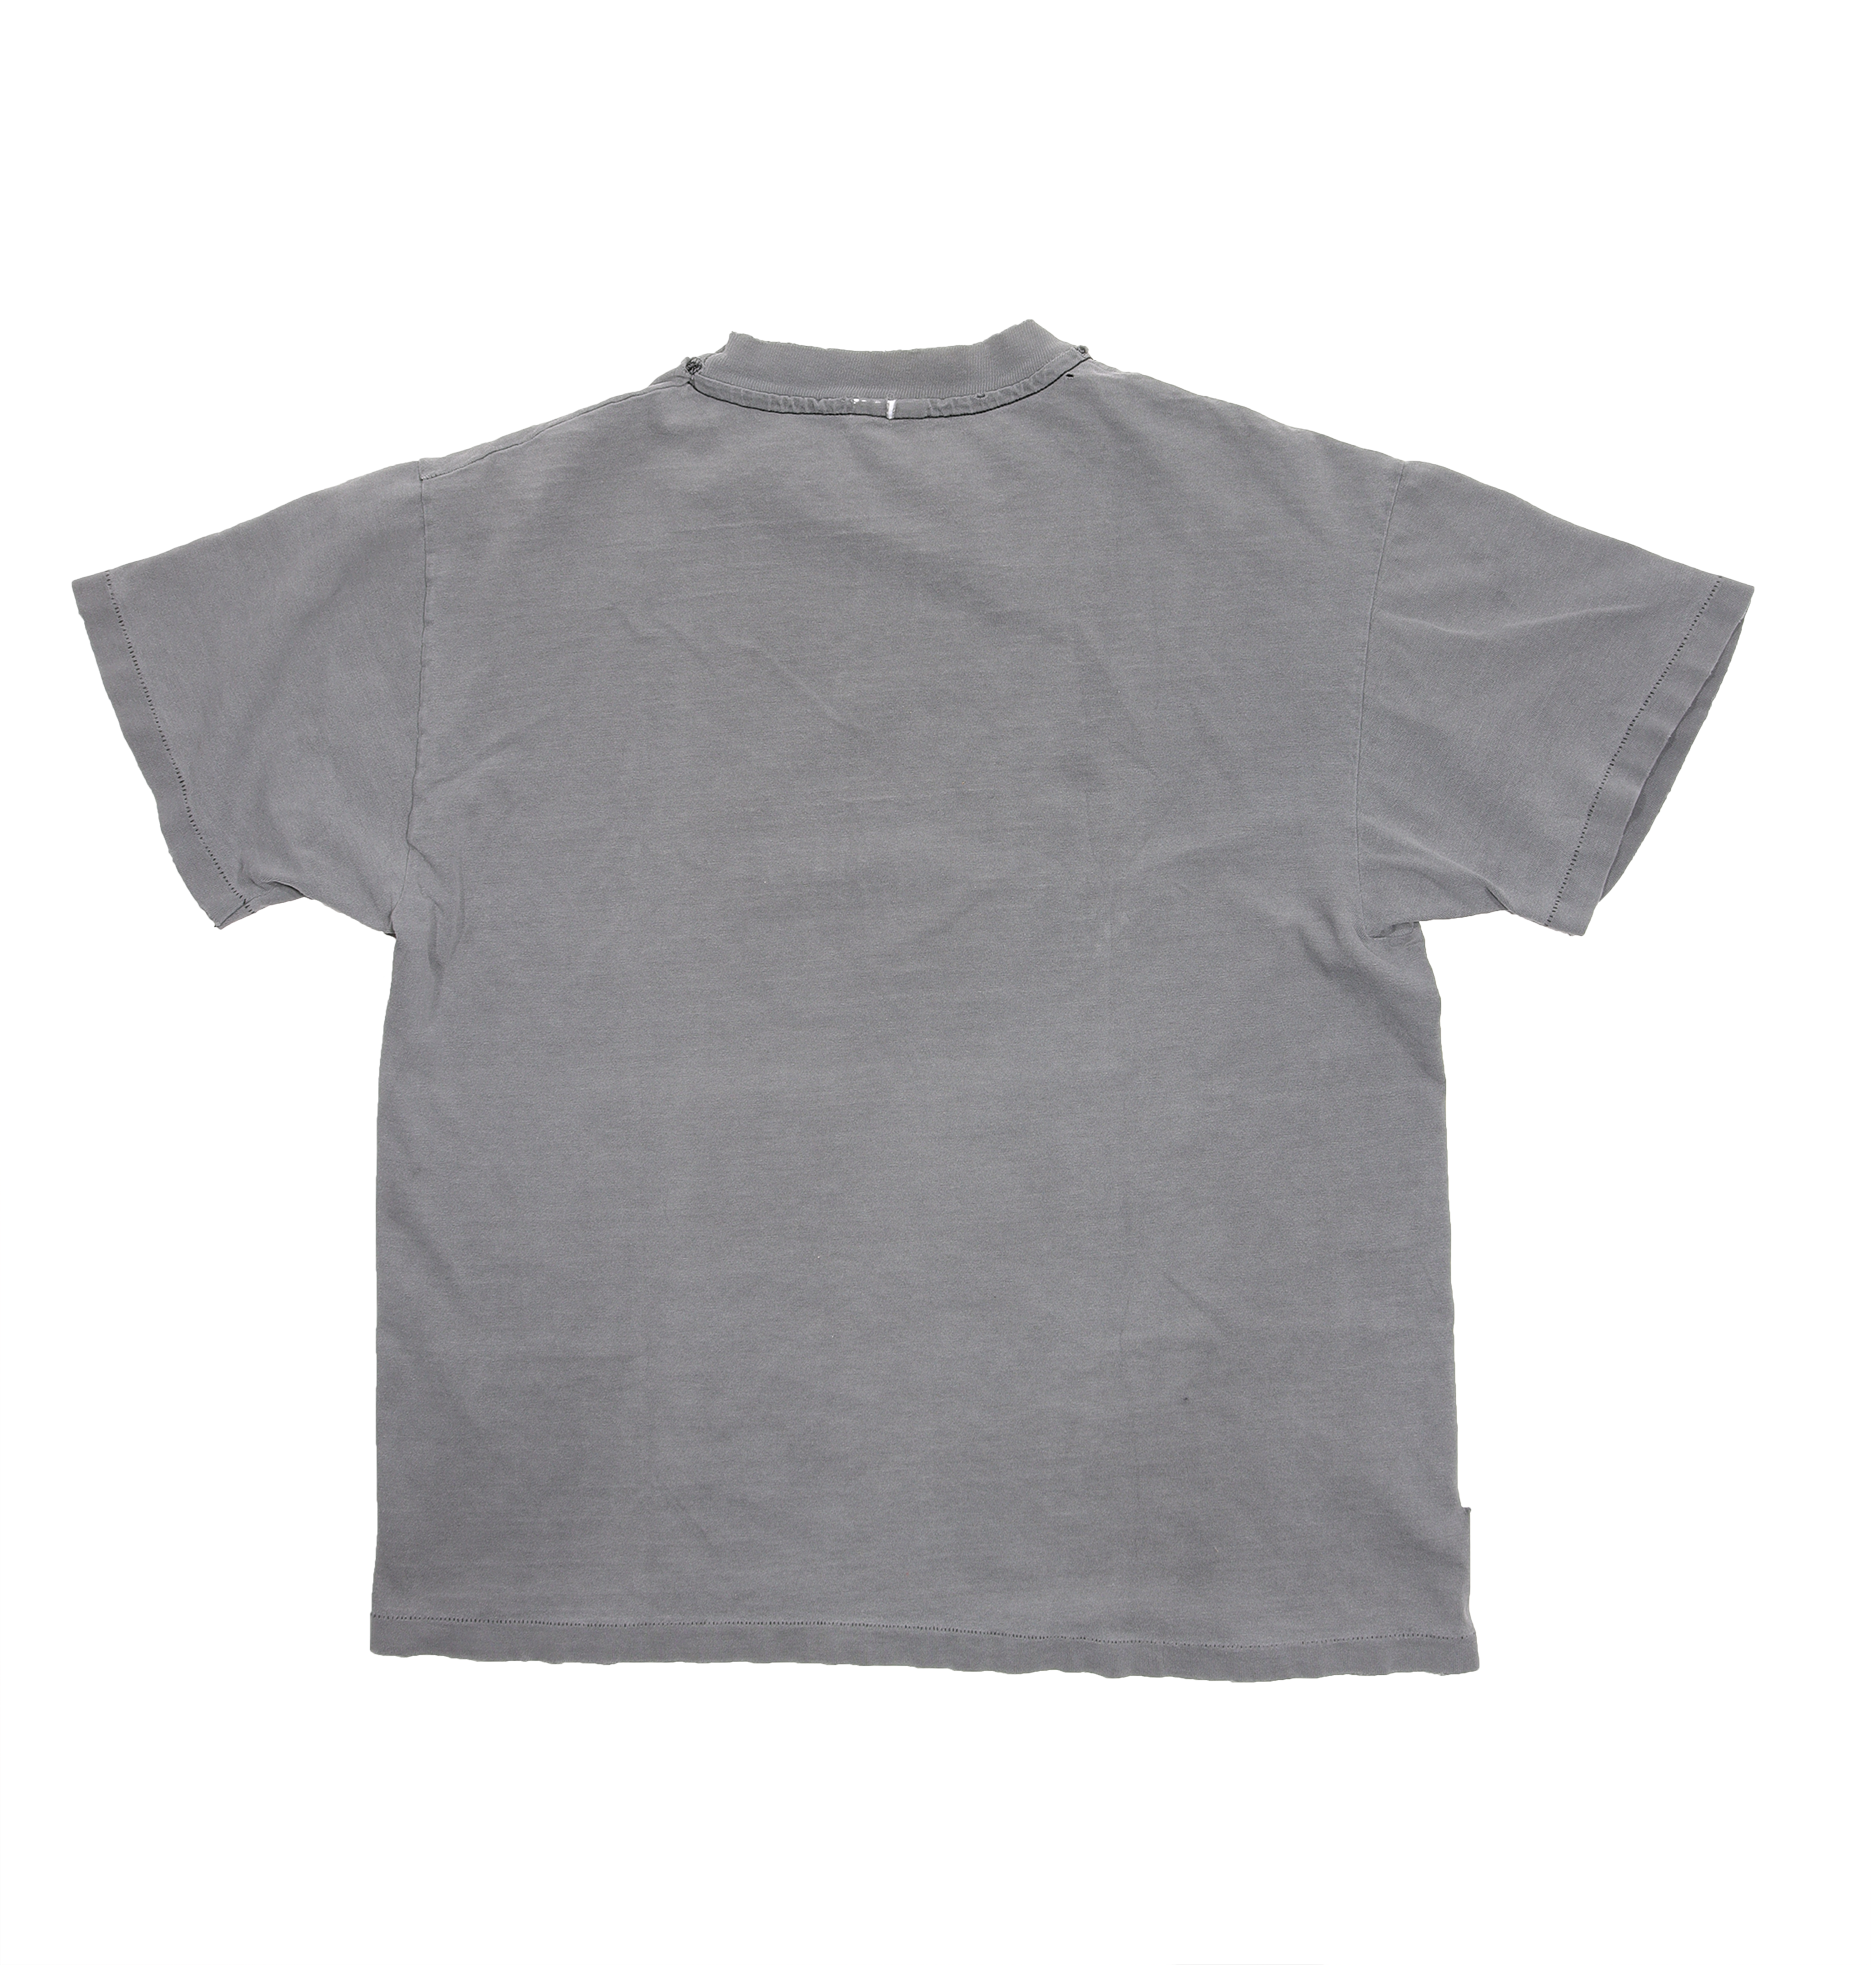 1990's MoMA Merchandise T-Shirt